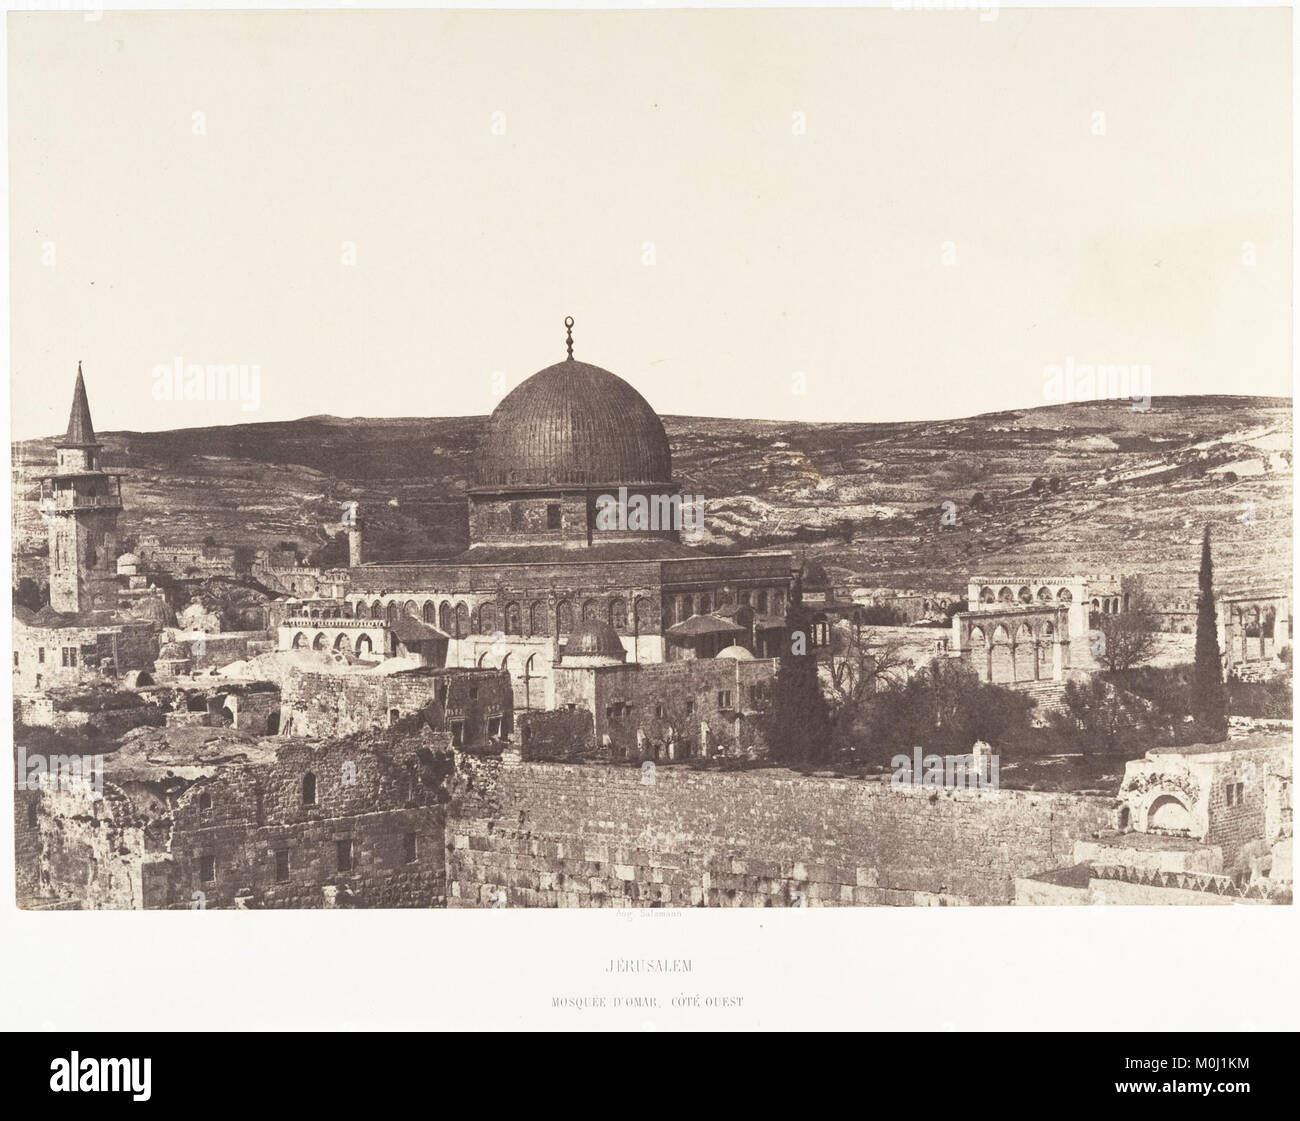 Jérusalem, Mosquée d'Omar, Côté ouest MET DP 131346 Stockfoto